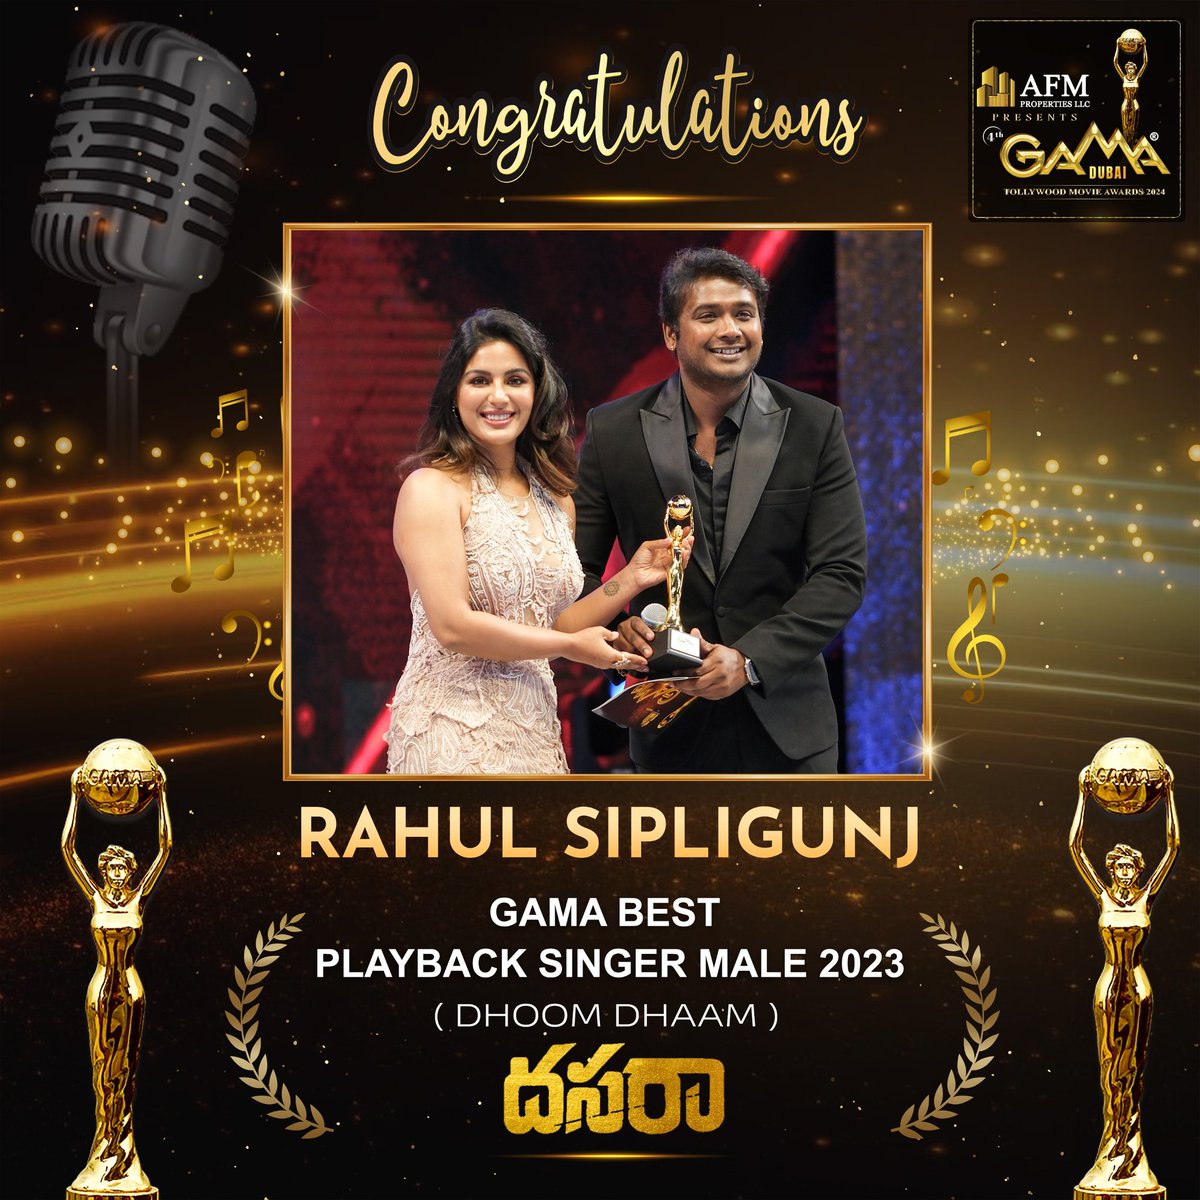 Sensational Singer #RahulSipligunj won GAMA BEST PLAYBACK SINGER MALE 2023 for #DhoomDhaam song from #Dasara 🔥🎤🎶 @Rahulsipligunj #Nani #KeerthySuresh #SrikanthOdela #SantoshNarayan #GAMAAwards2024 #GAMAMovieAwards #GAMA2024 #GAMADubai #AFMProperties